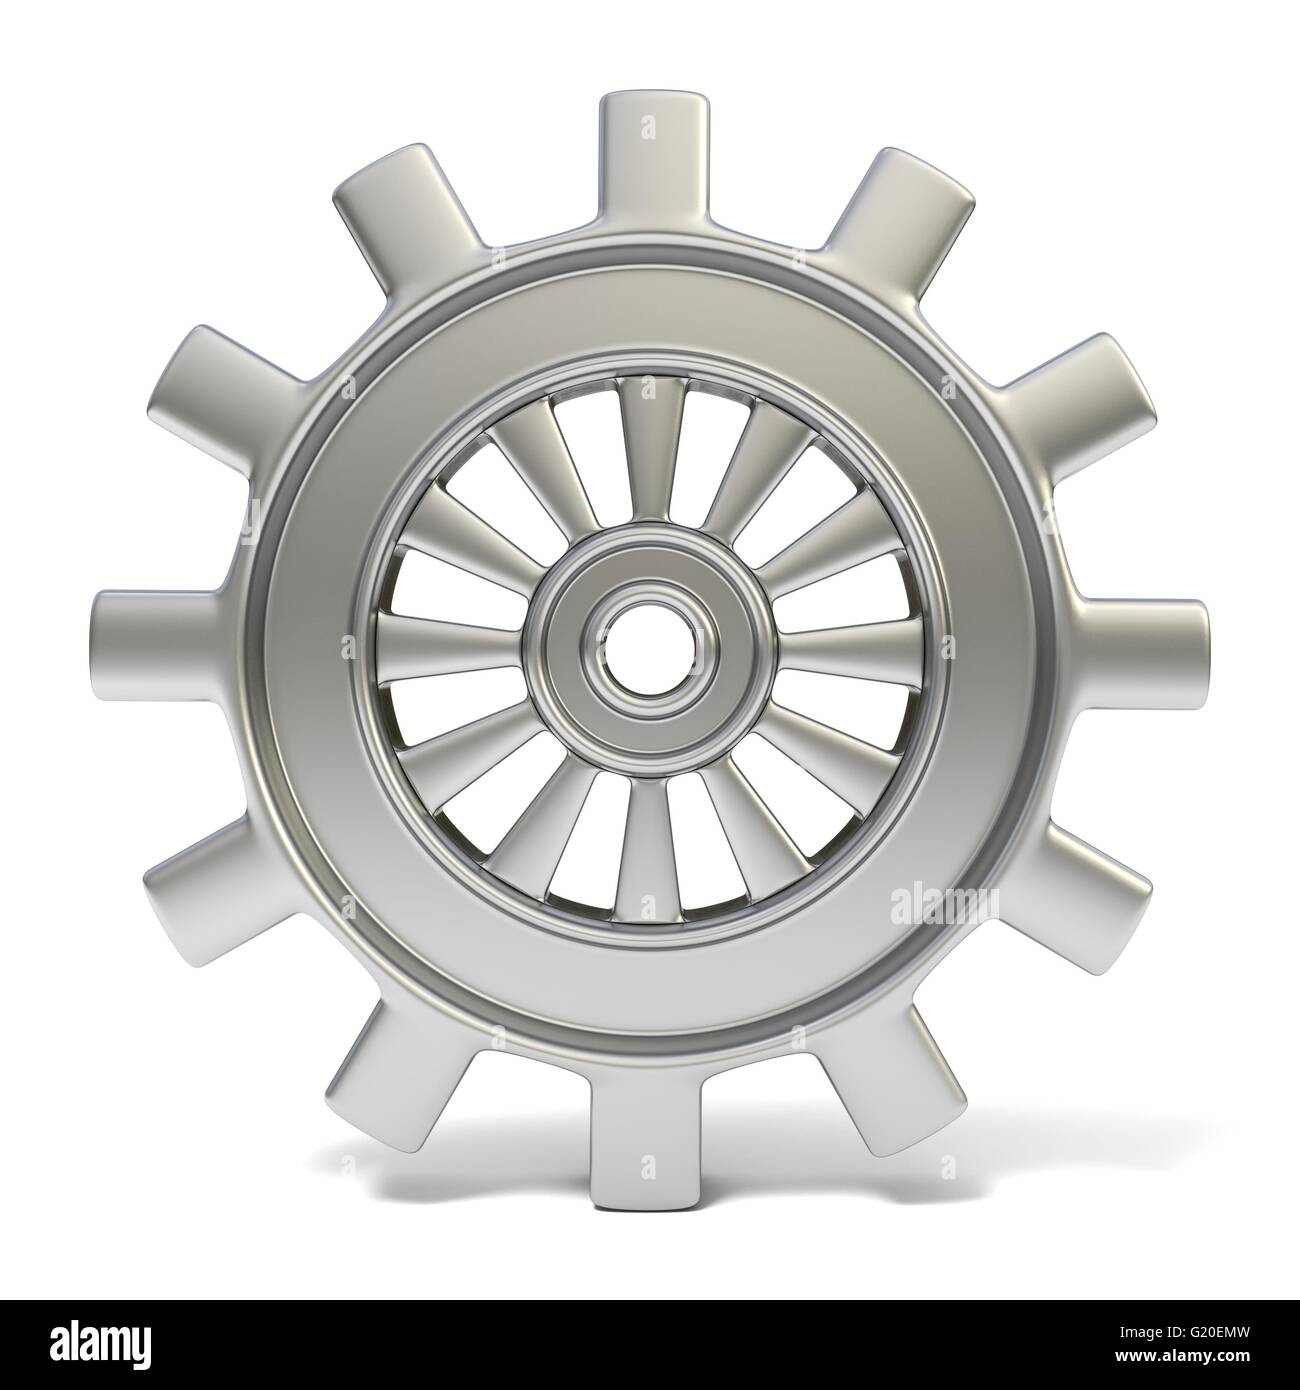 Silver cogwheel. 3D render illustration isolated on white background Stock Photo